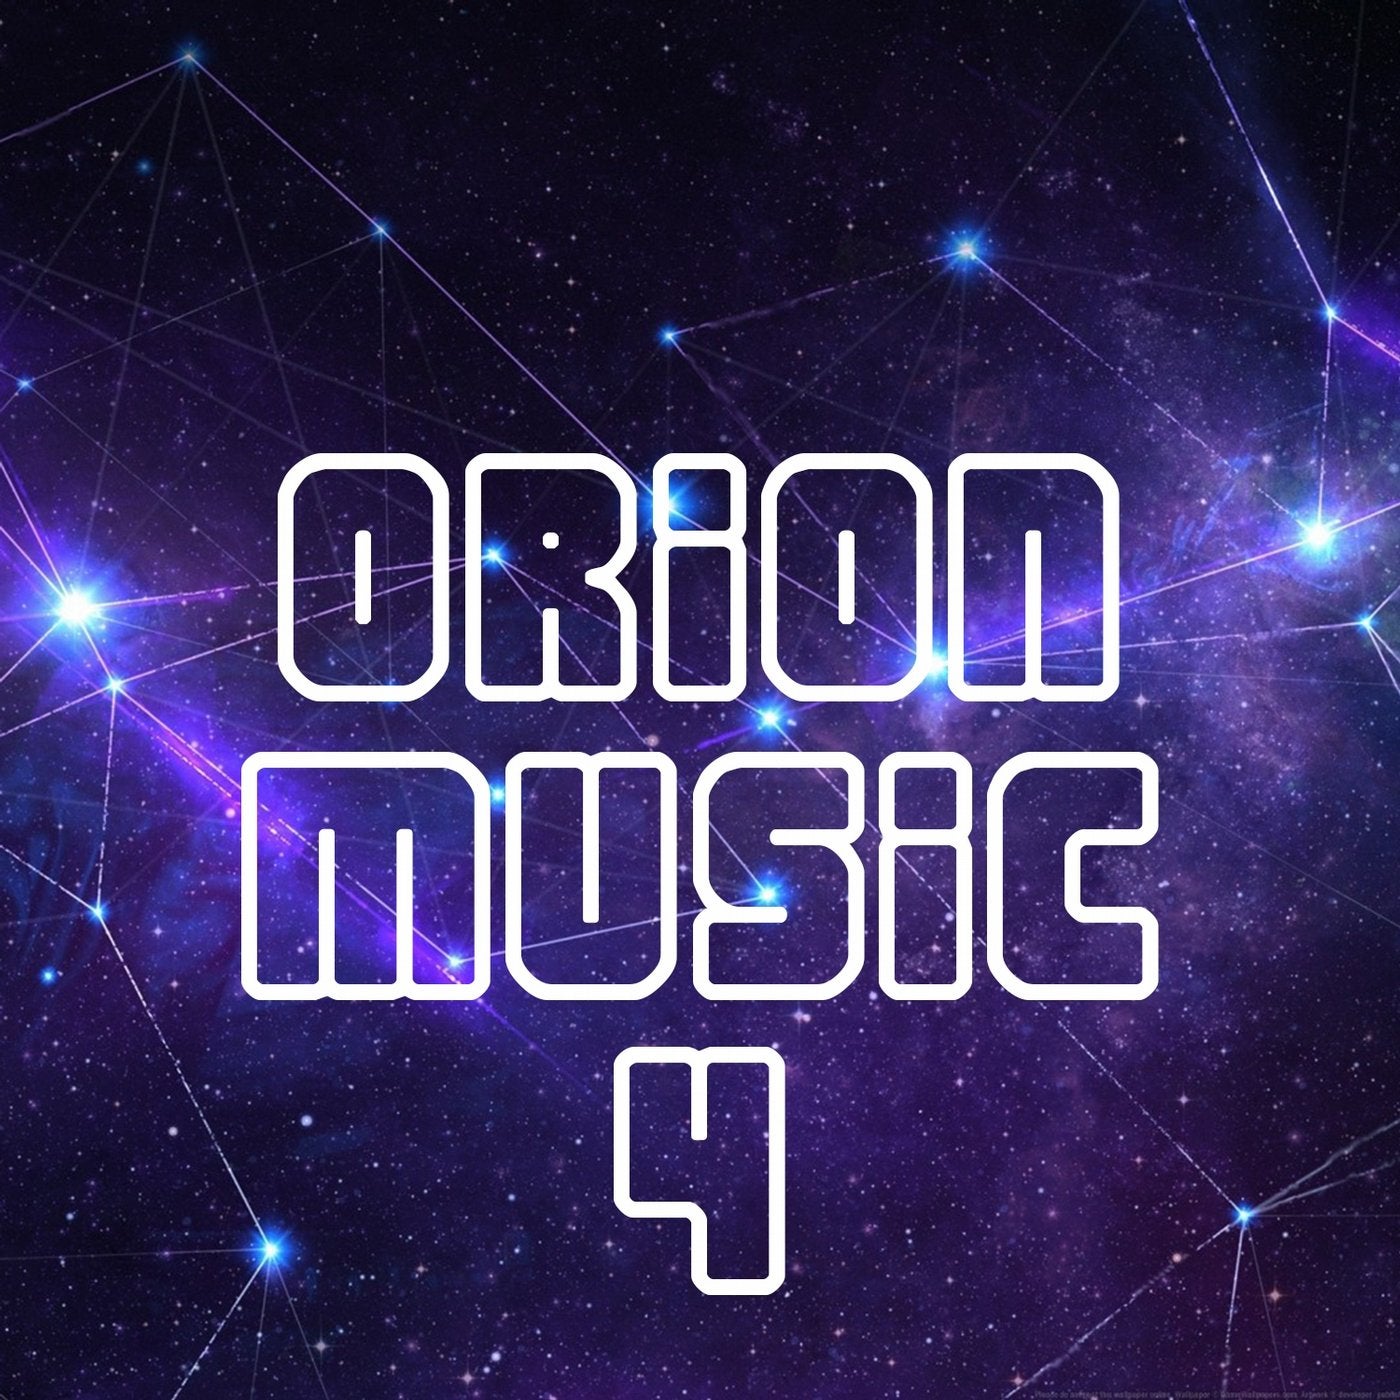 Orion Music, Vol. 4